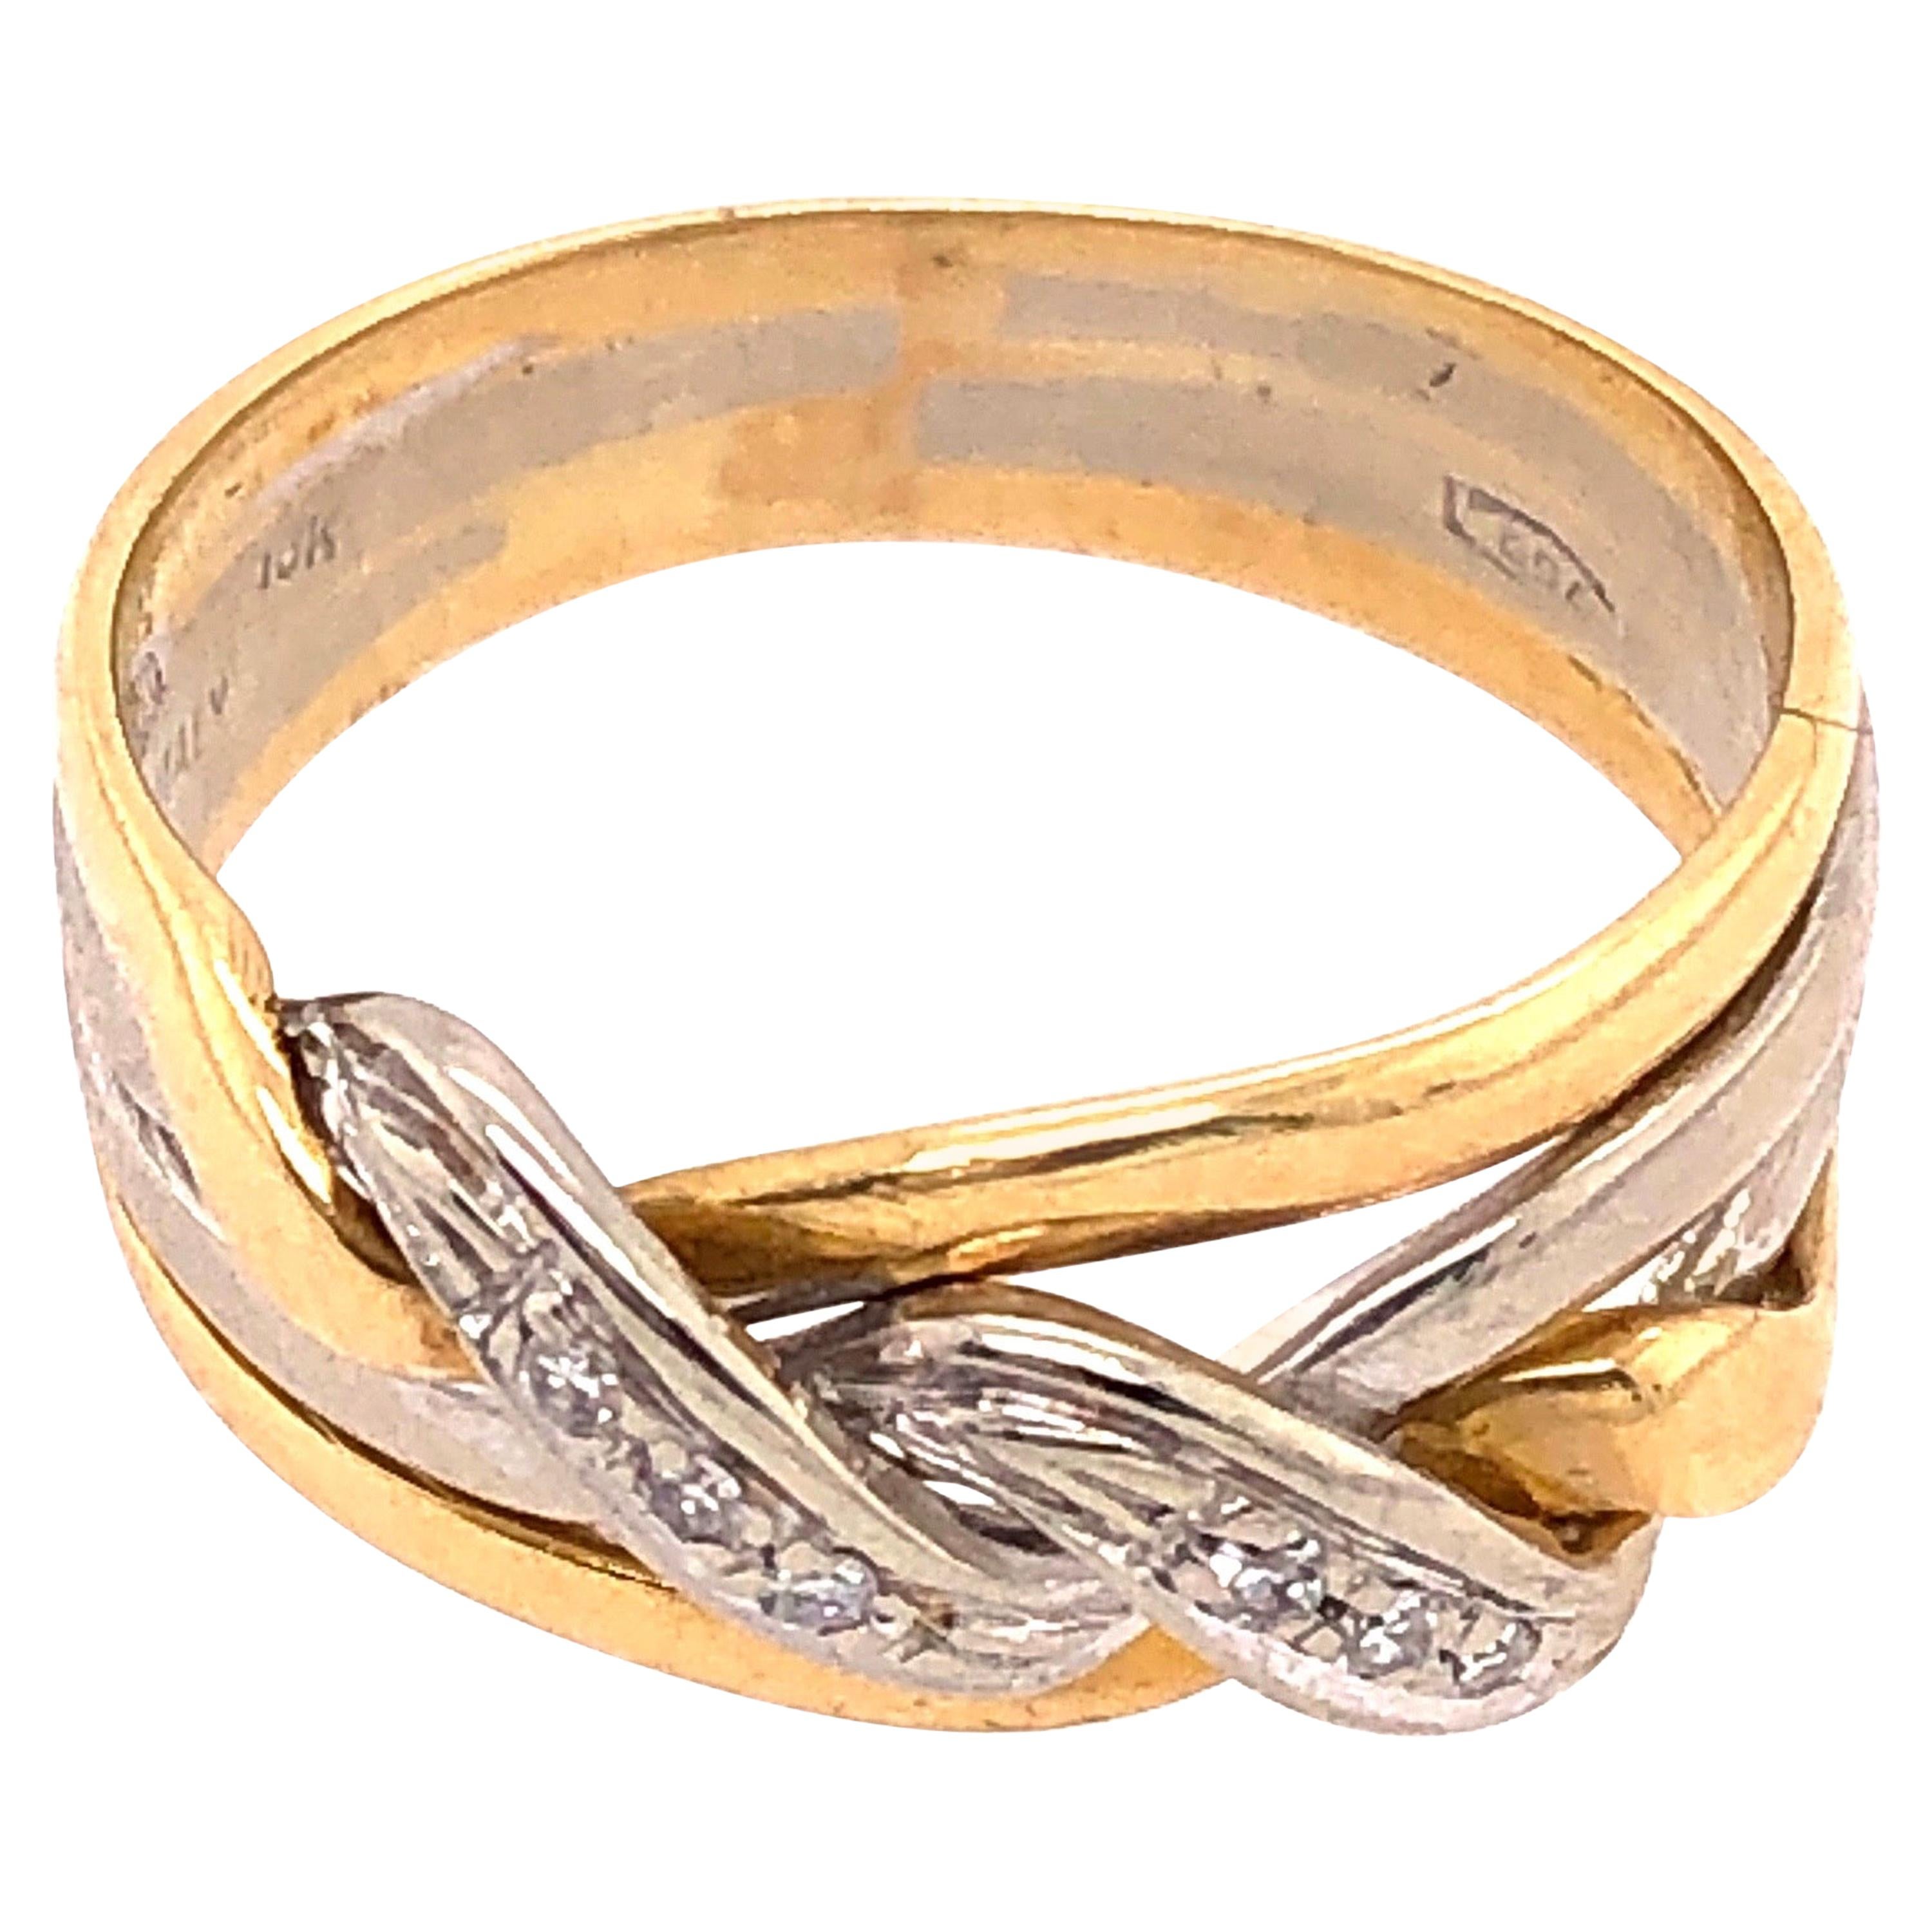 18 Karat Two-Tone Gold and Diamond Twist Wedding Fashion Ring 0.18 TDW